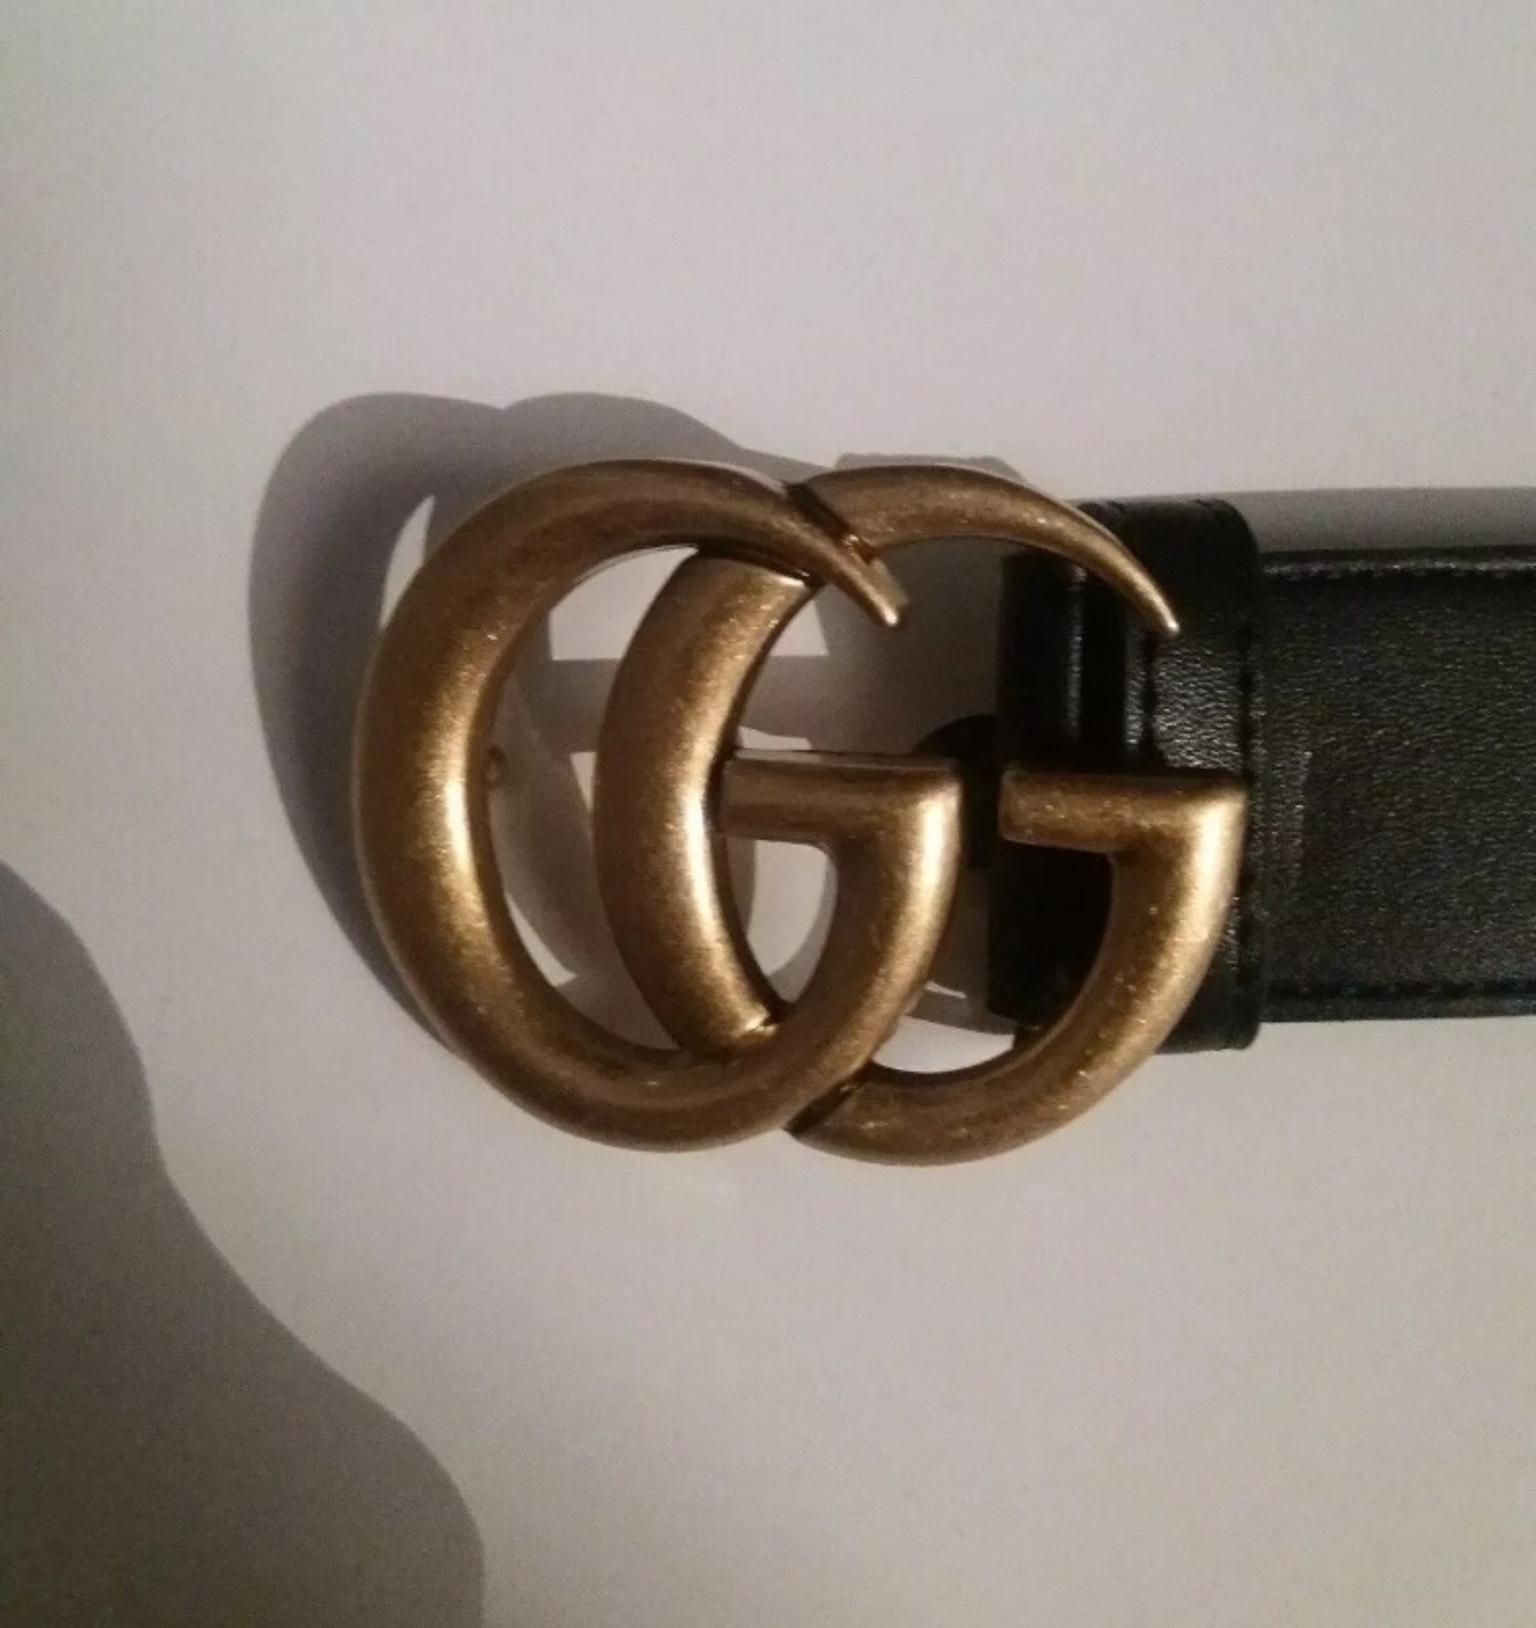 second hand gucci belt uk